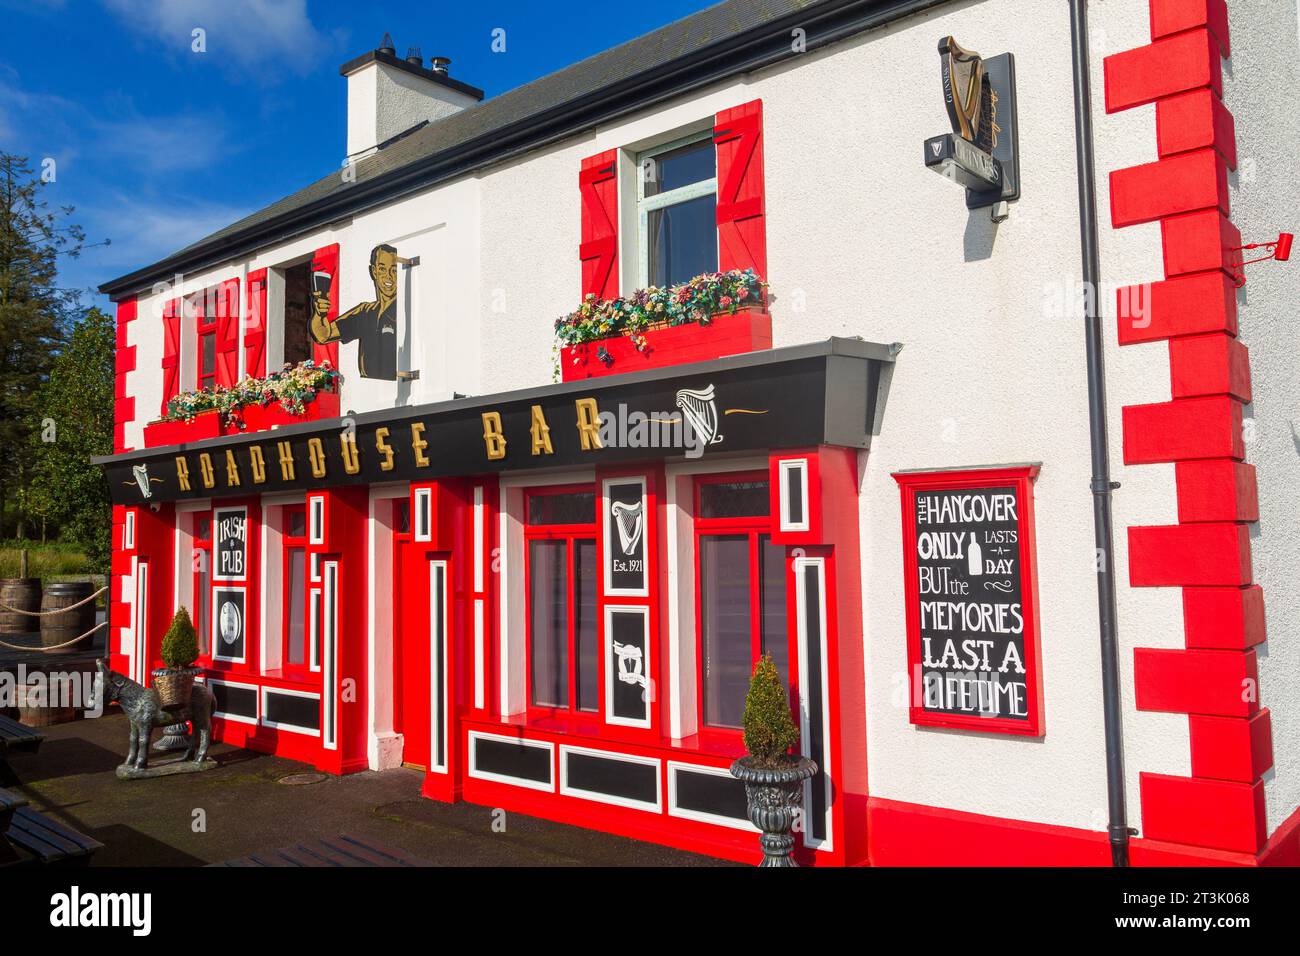 Roadhouse Bar, Ballybofey, County Donegal, Irlanda Foto Stock